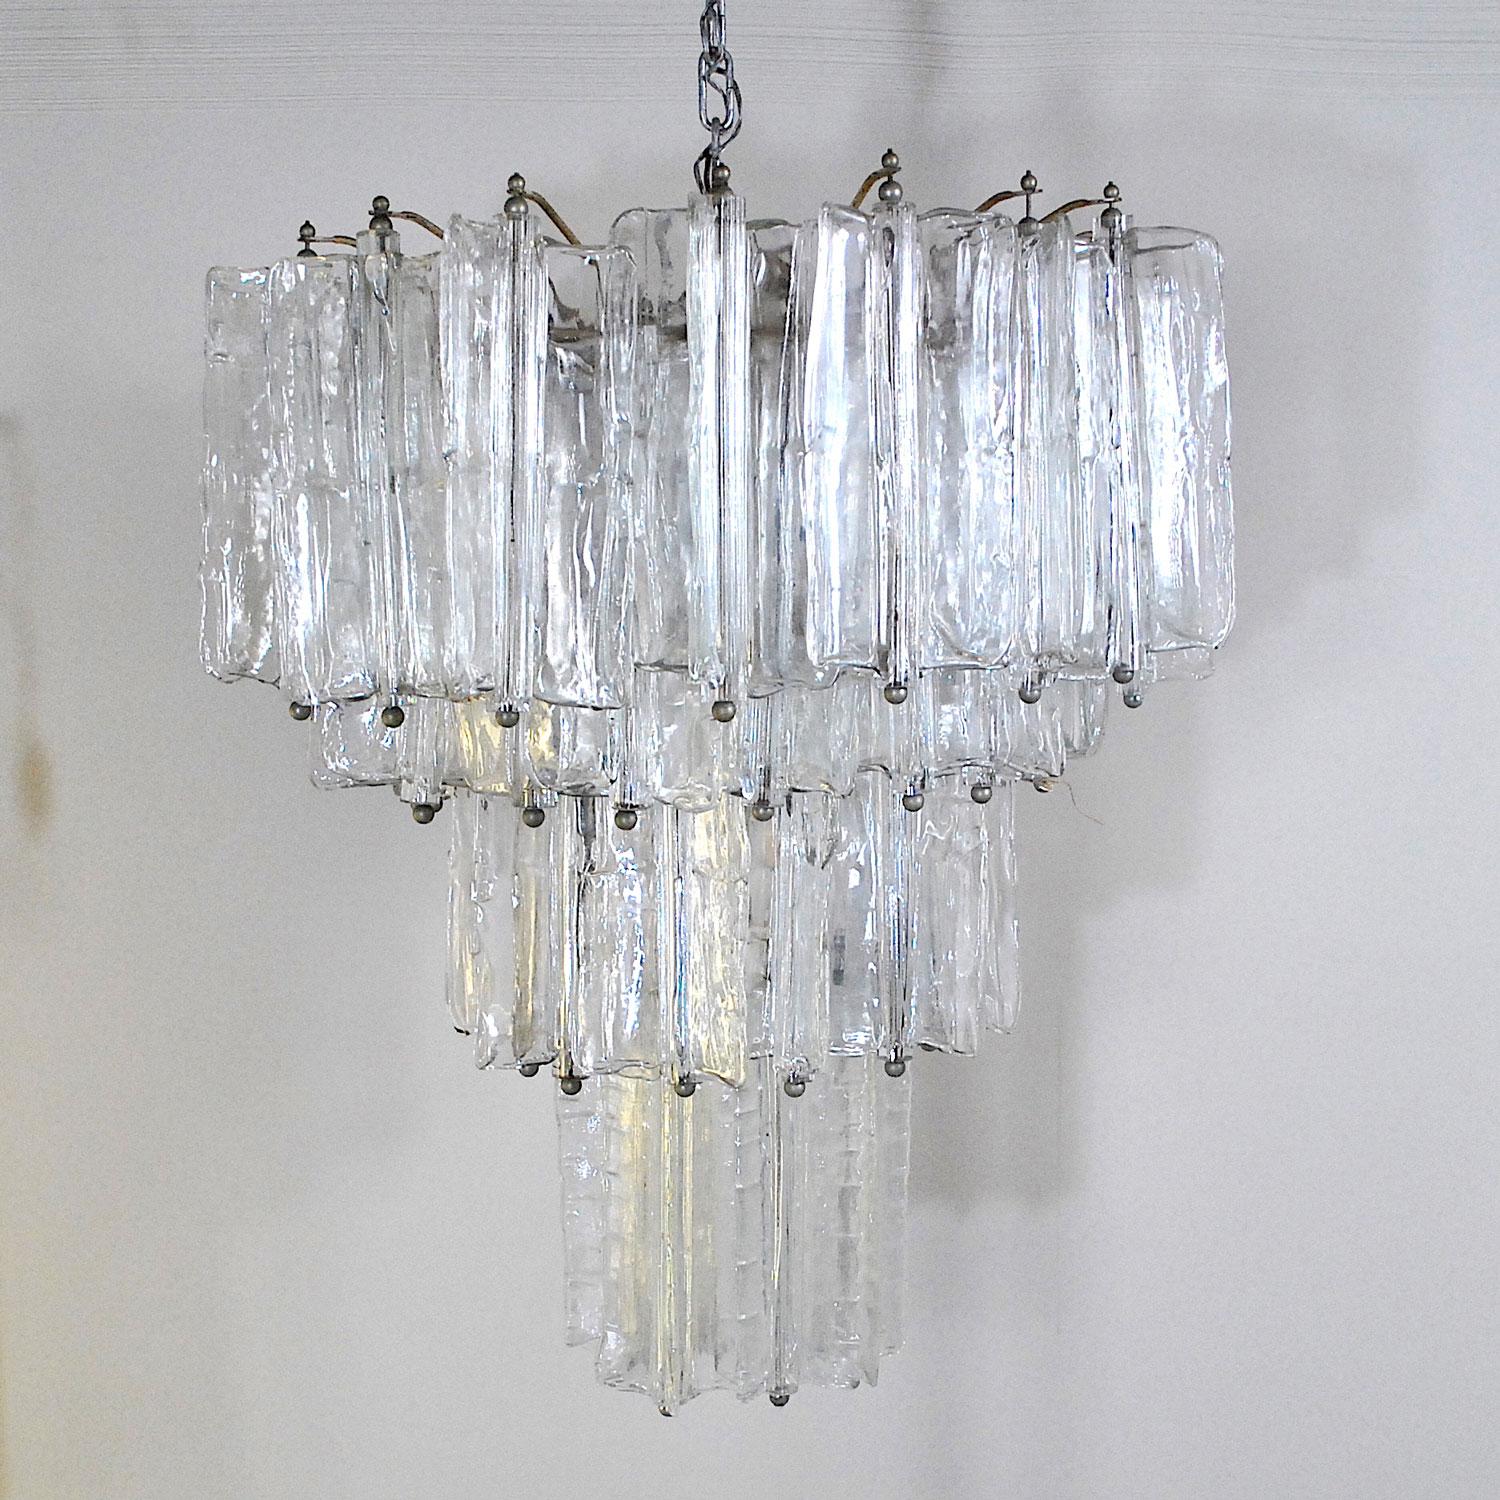 Toni Zuccheri for Venini Italian midcentury chandelier in Murano glass from the 1950s.